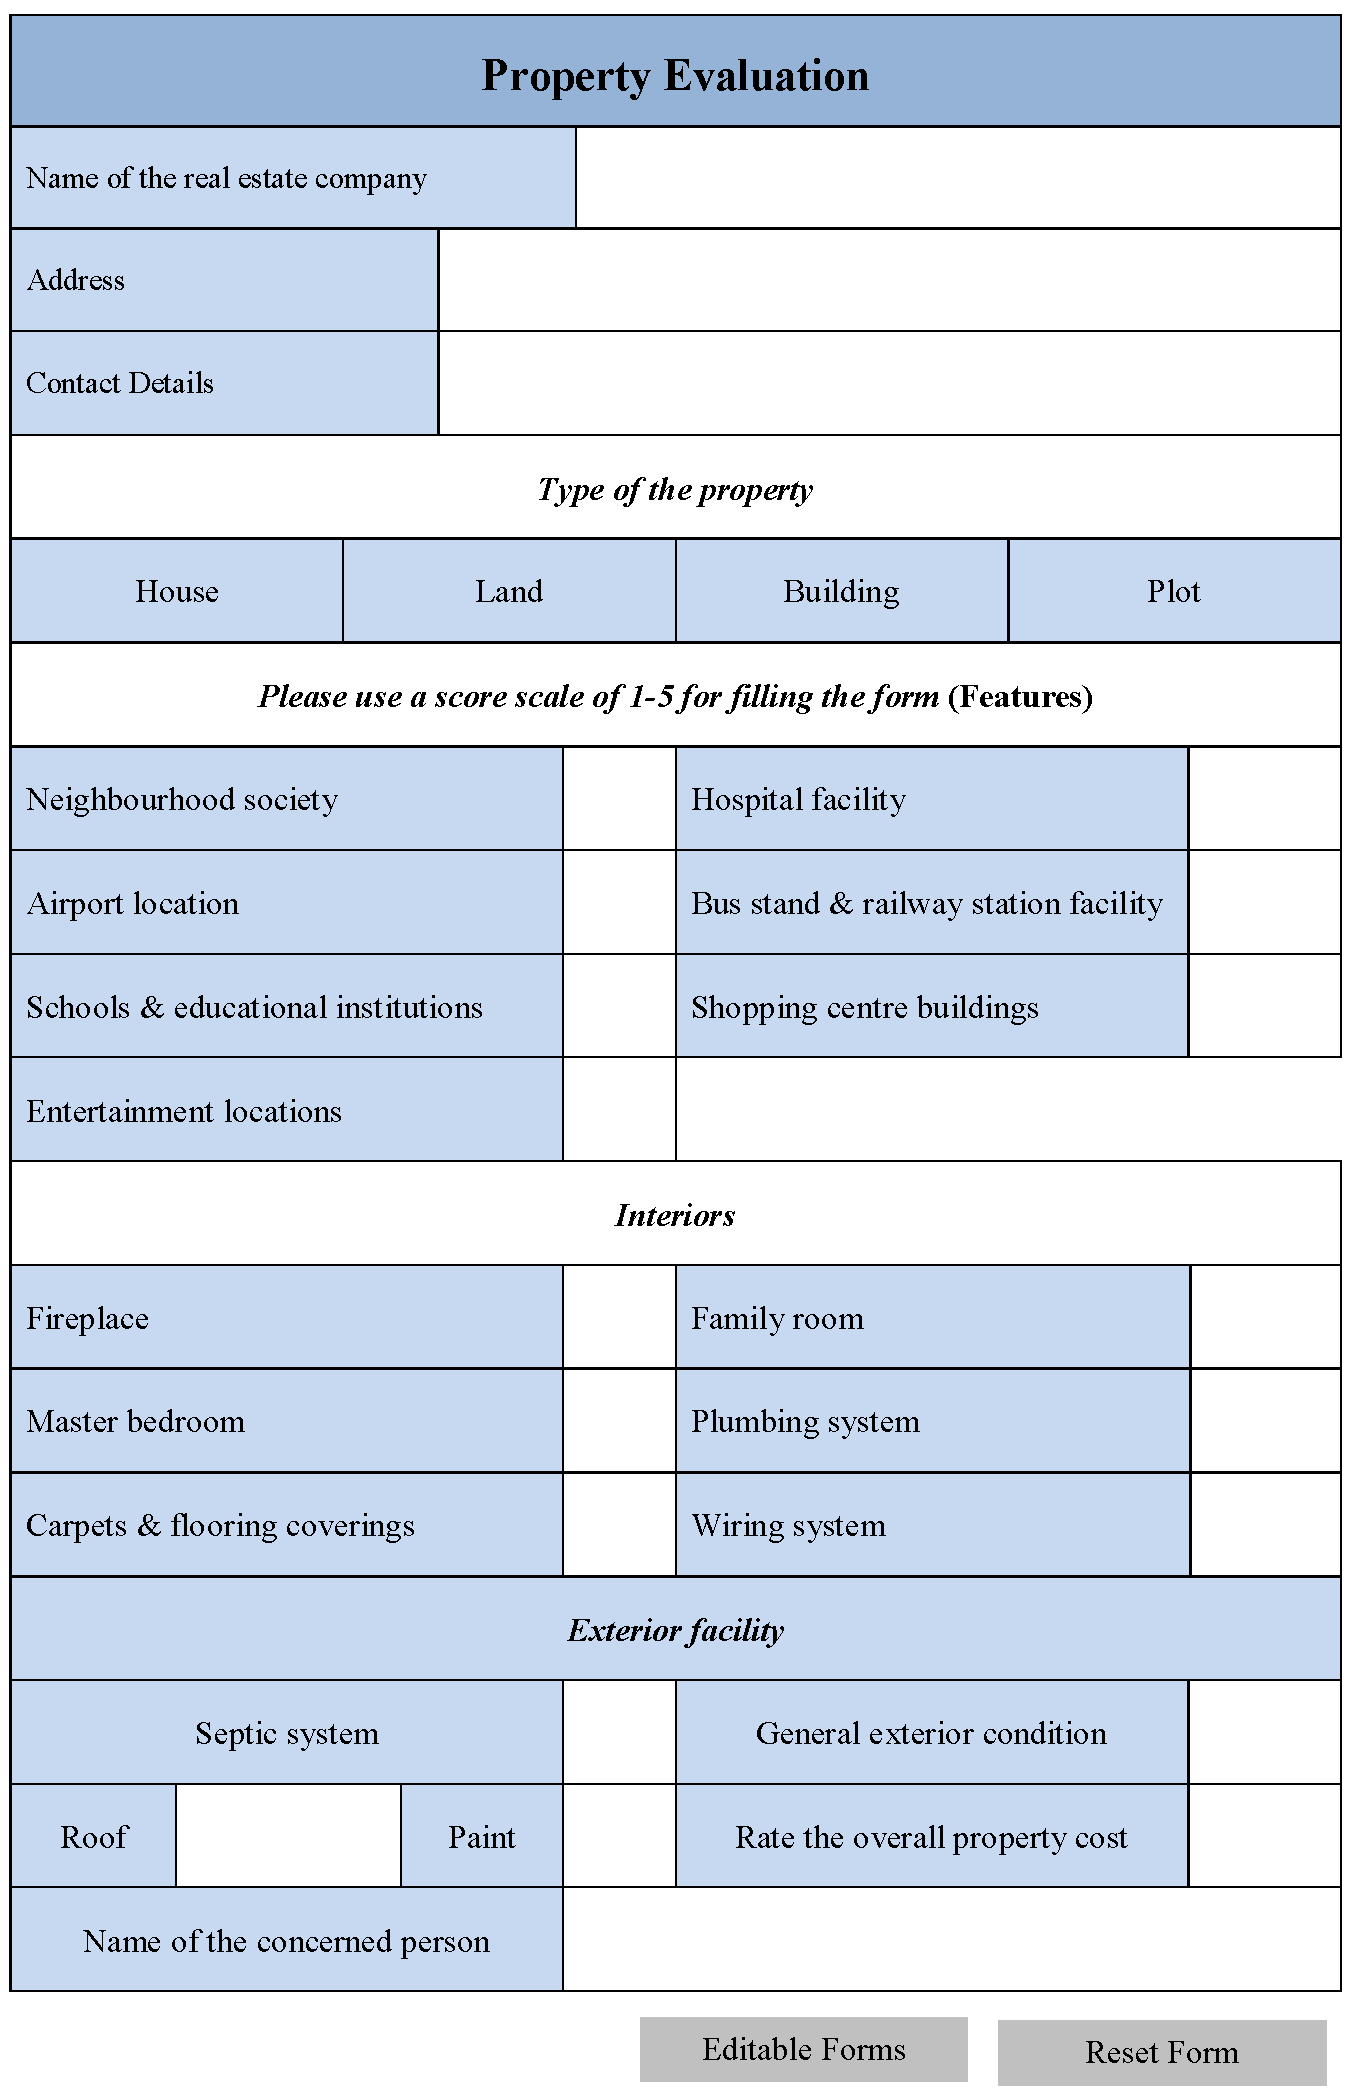 Property Evaluation Form Editable Pdf Forms